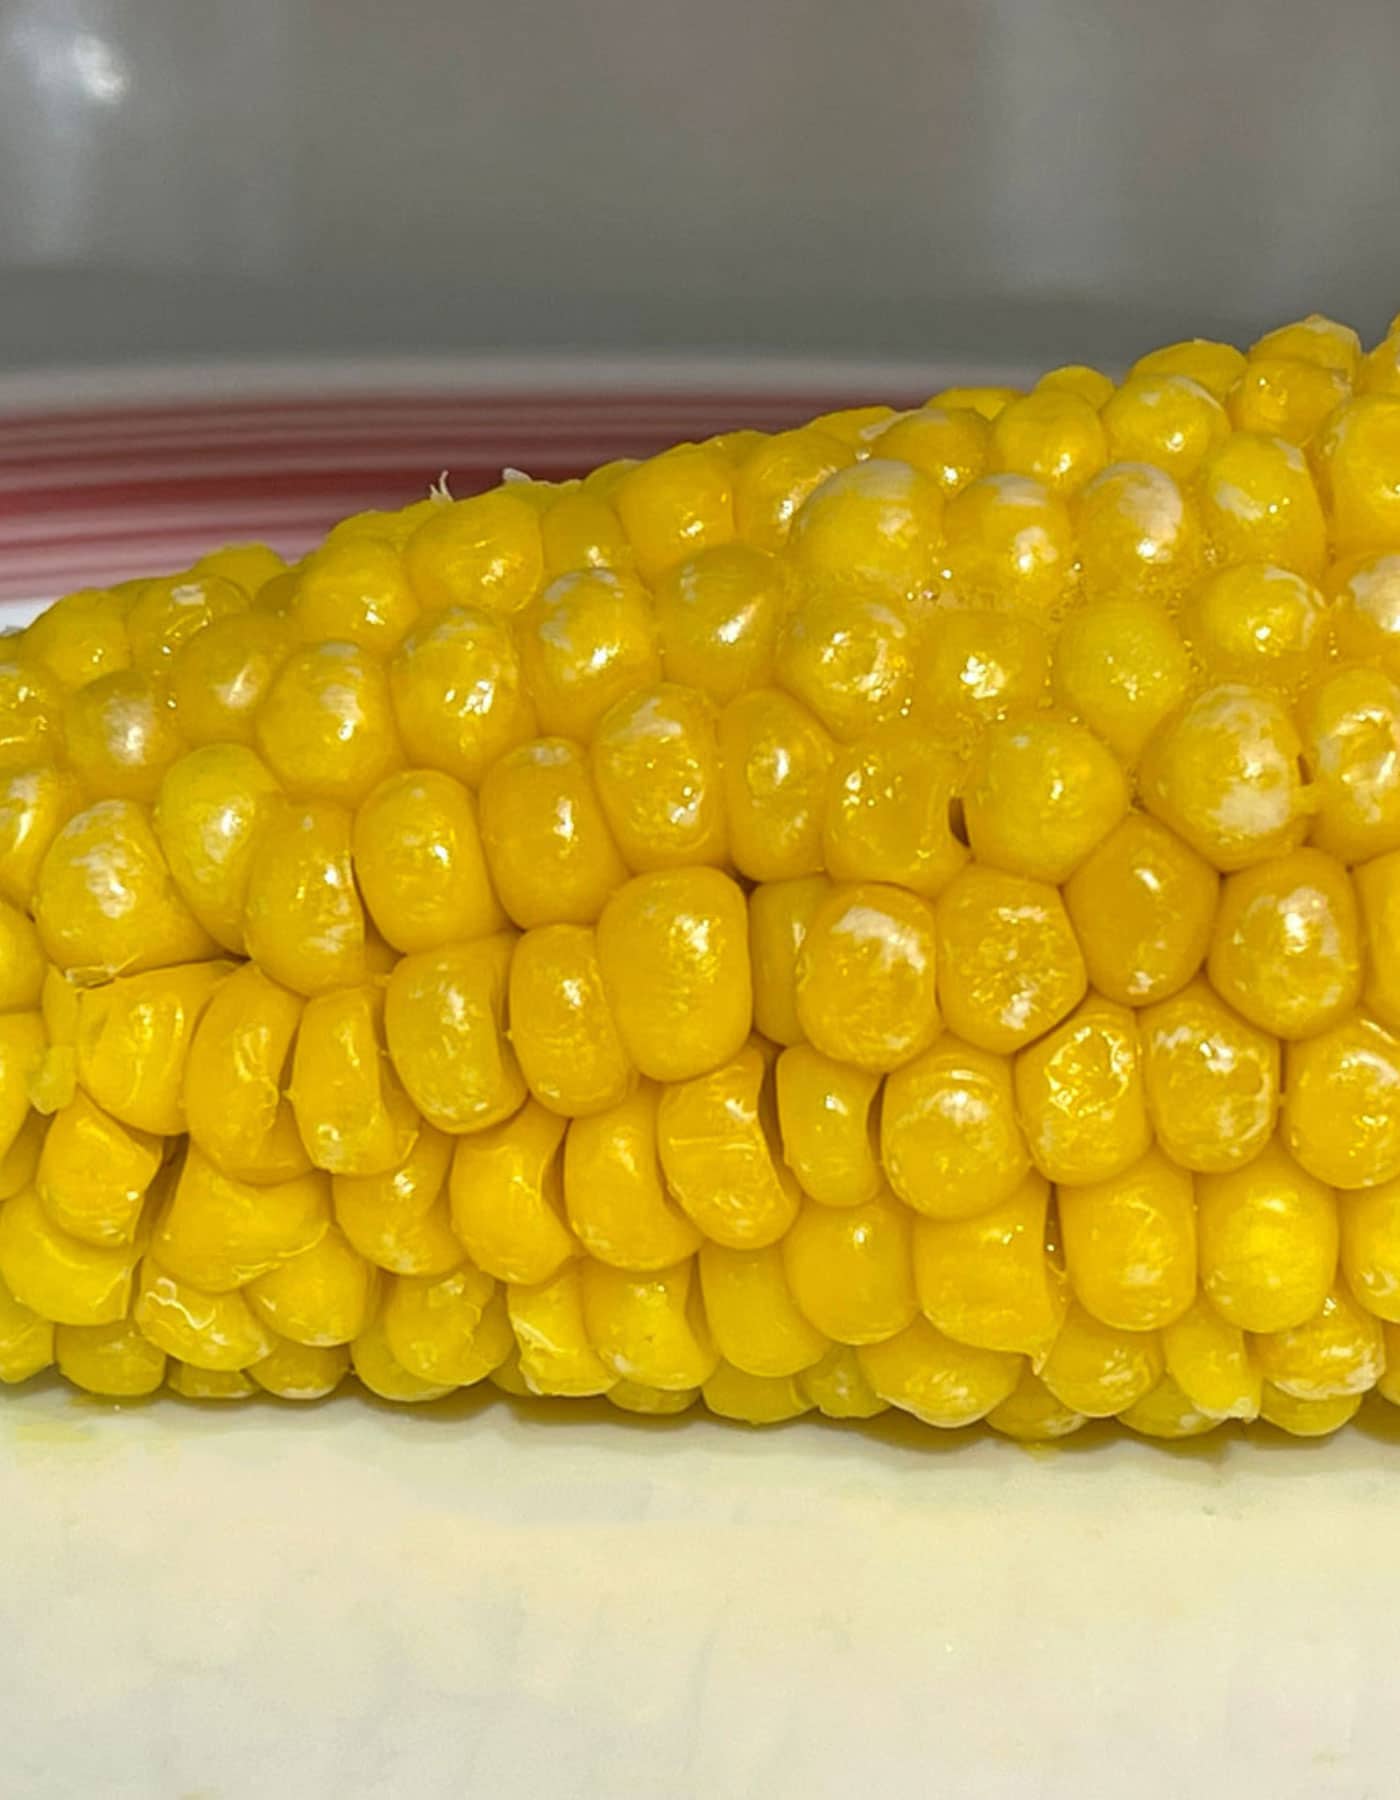 microwave corn on the cob